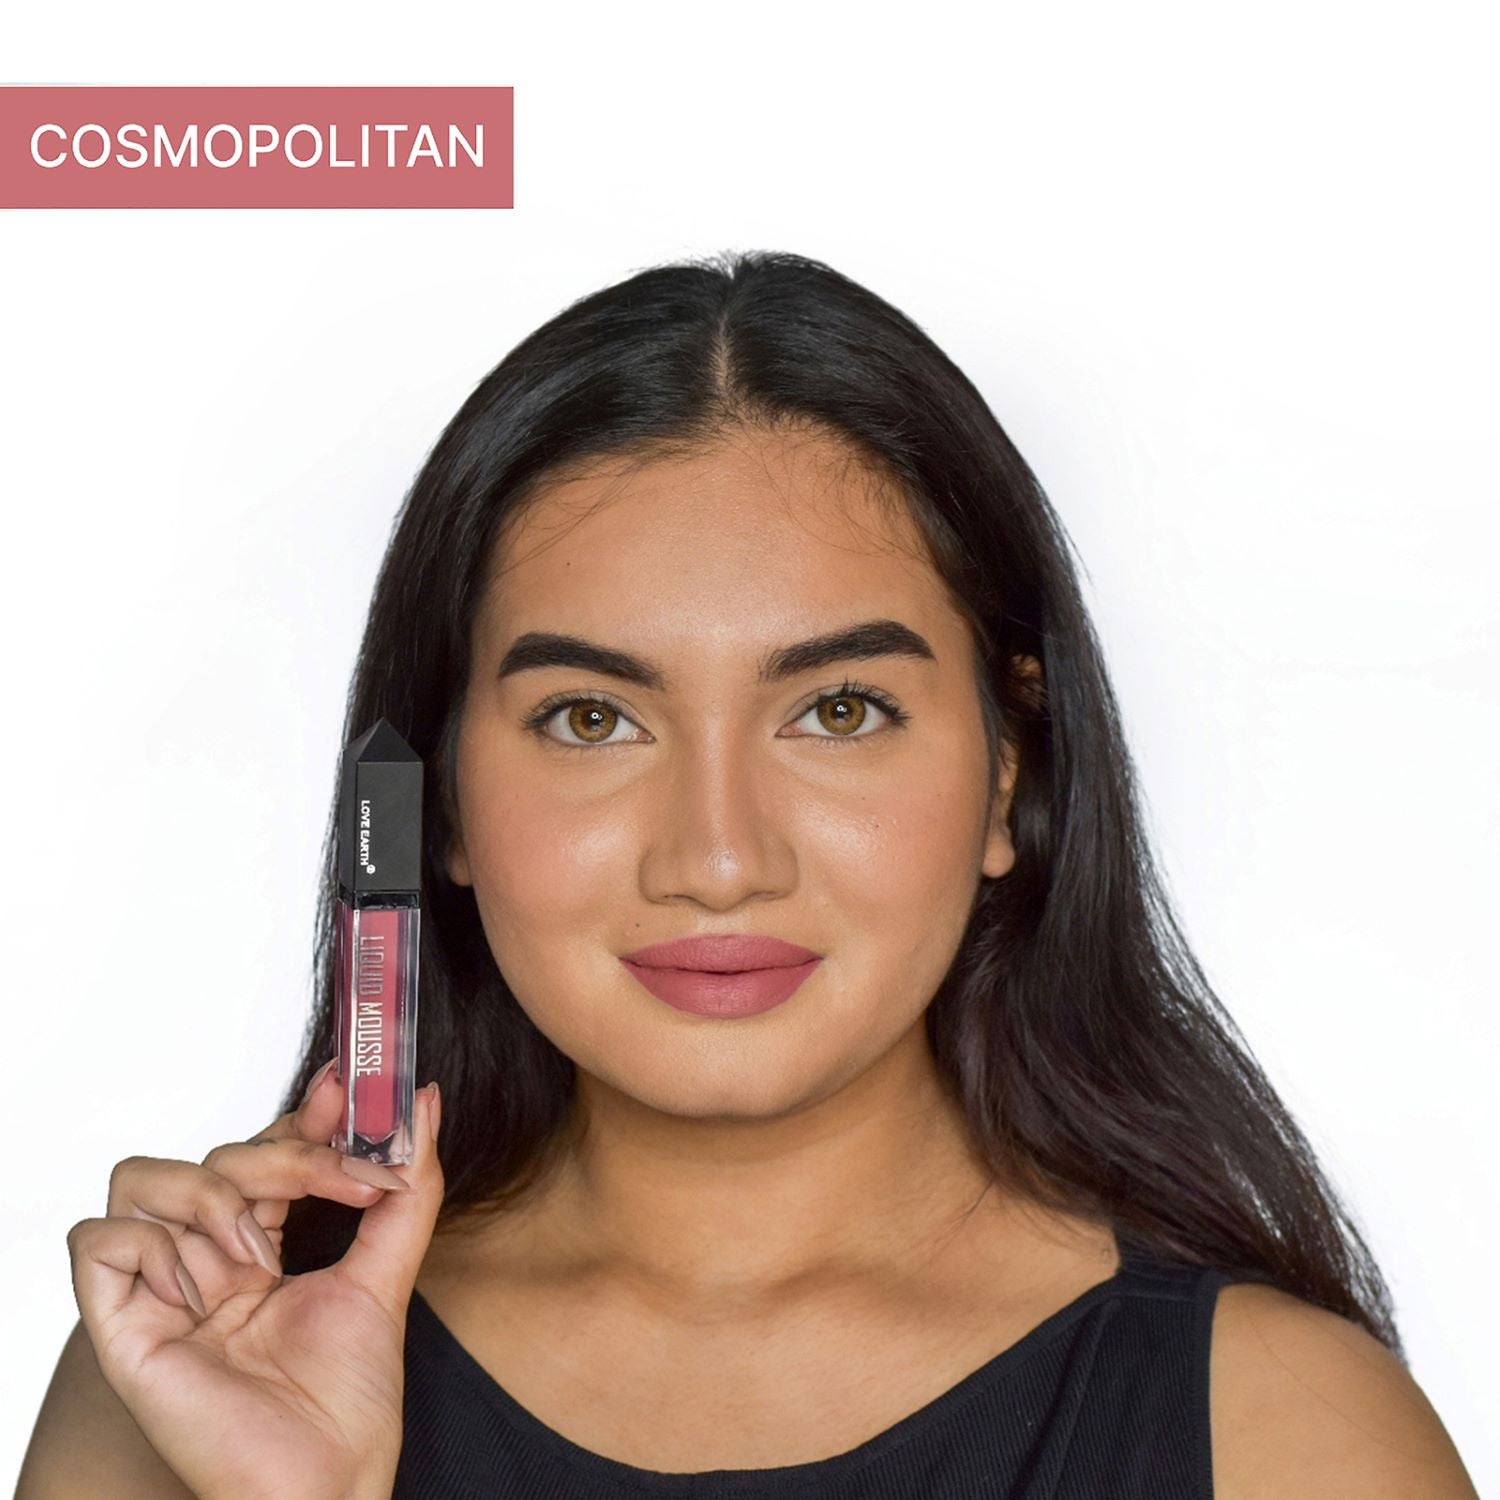 Liquid Lipstick - Cosmopolitan